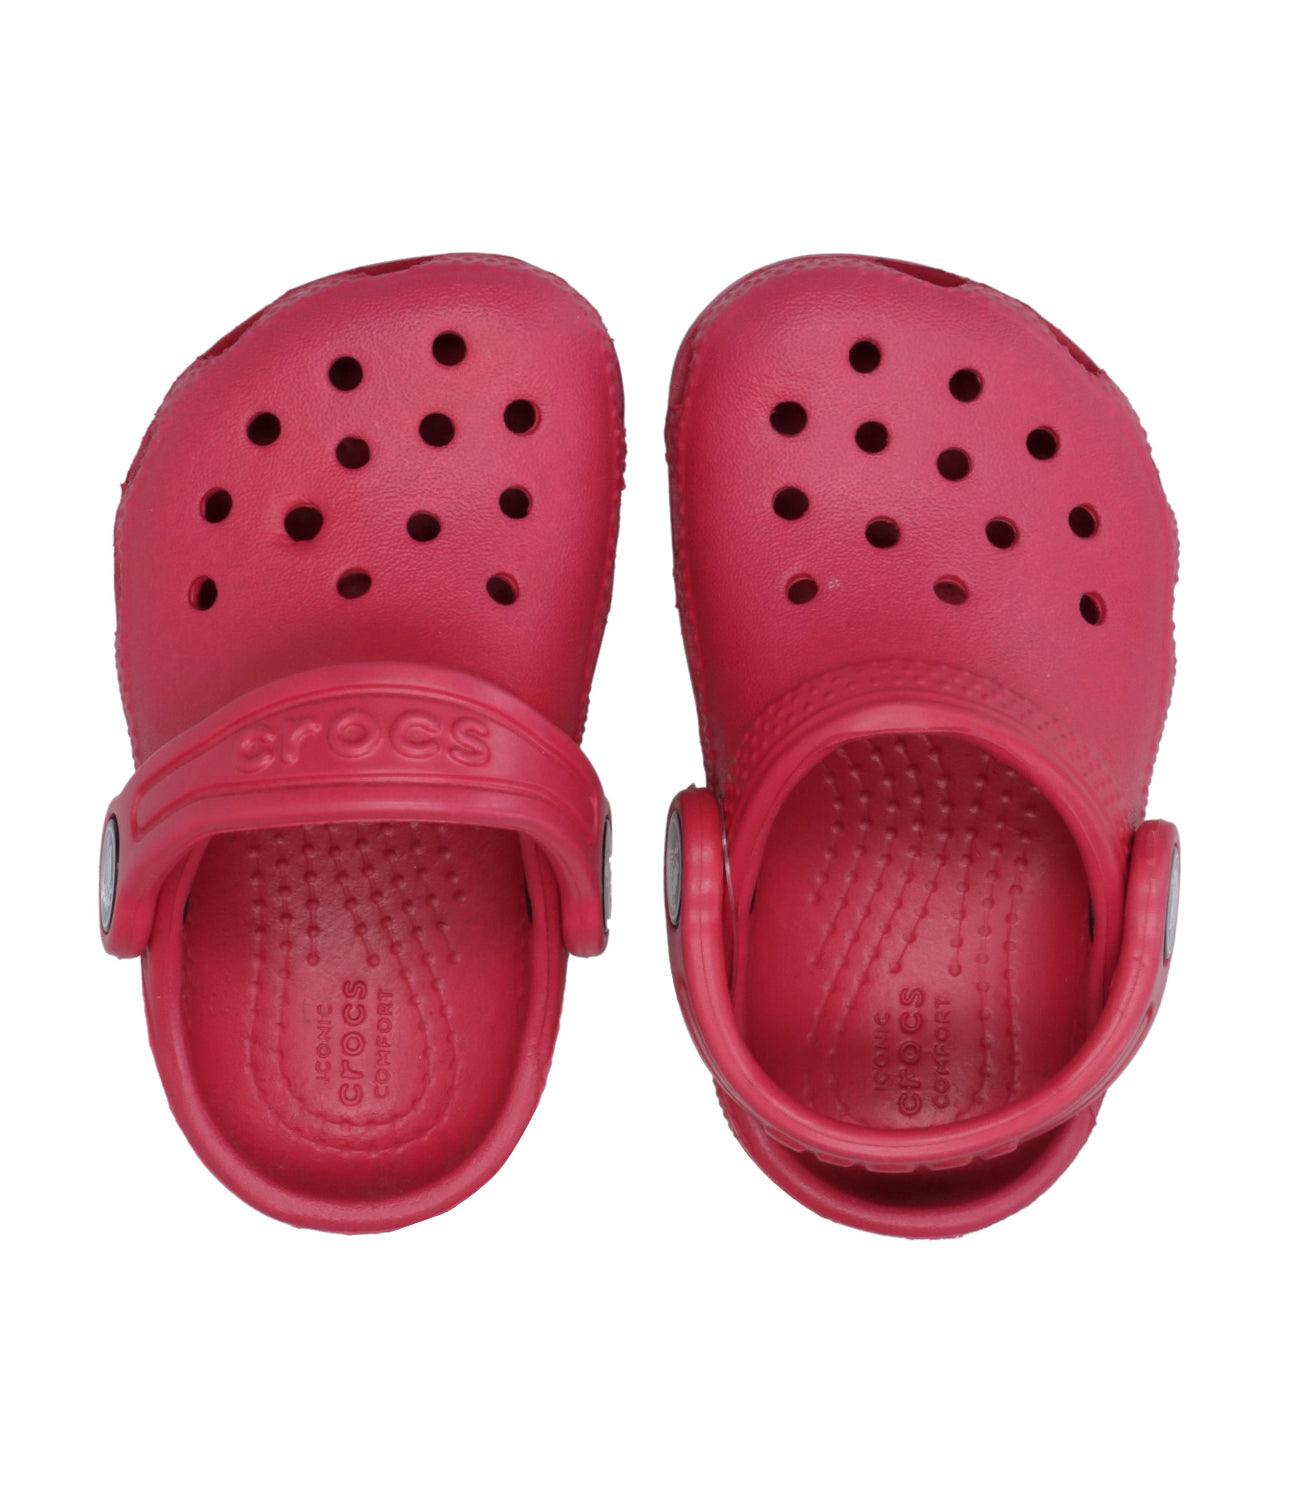 Crocs Kids | Sabot Classic Clog T Rosso